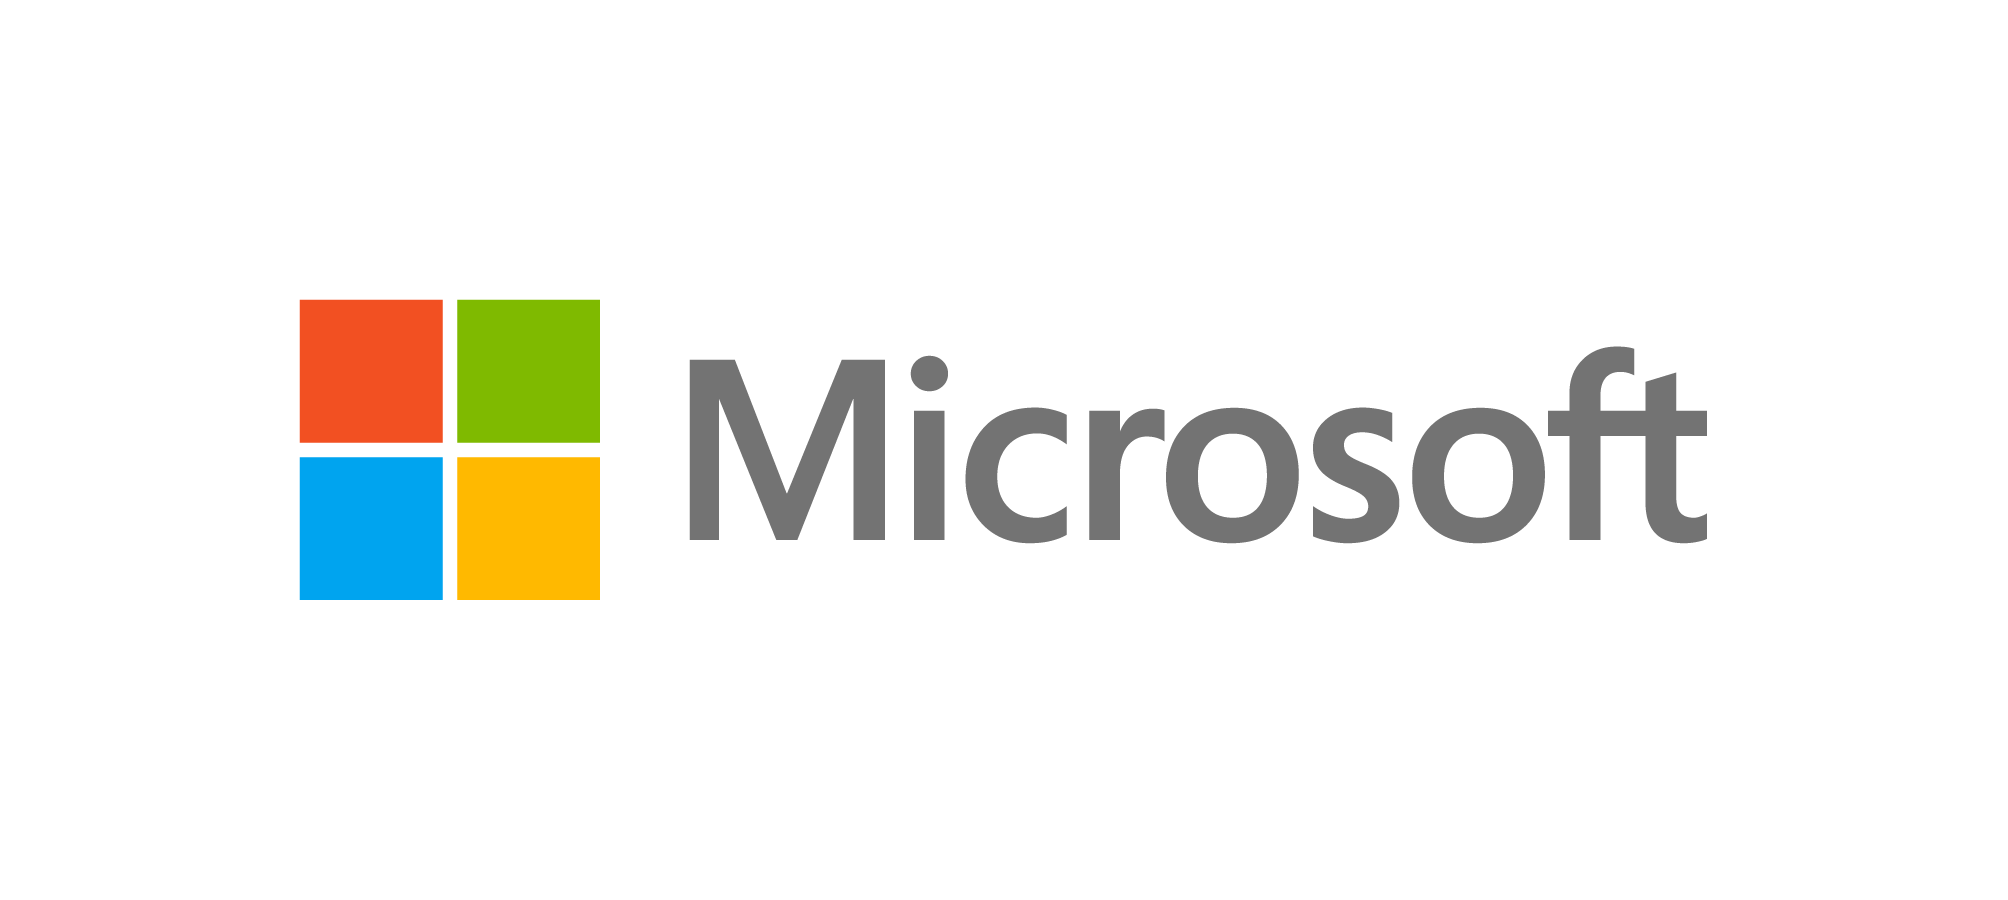 Microsoft-logo_rgb_gray